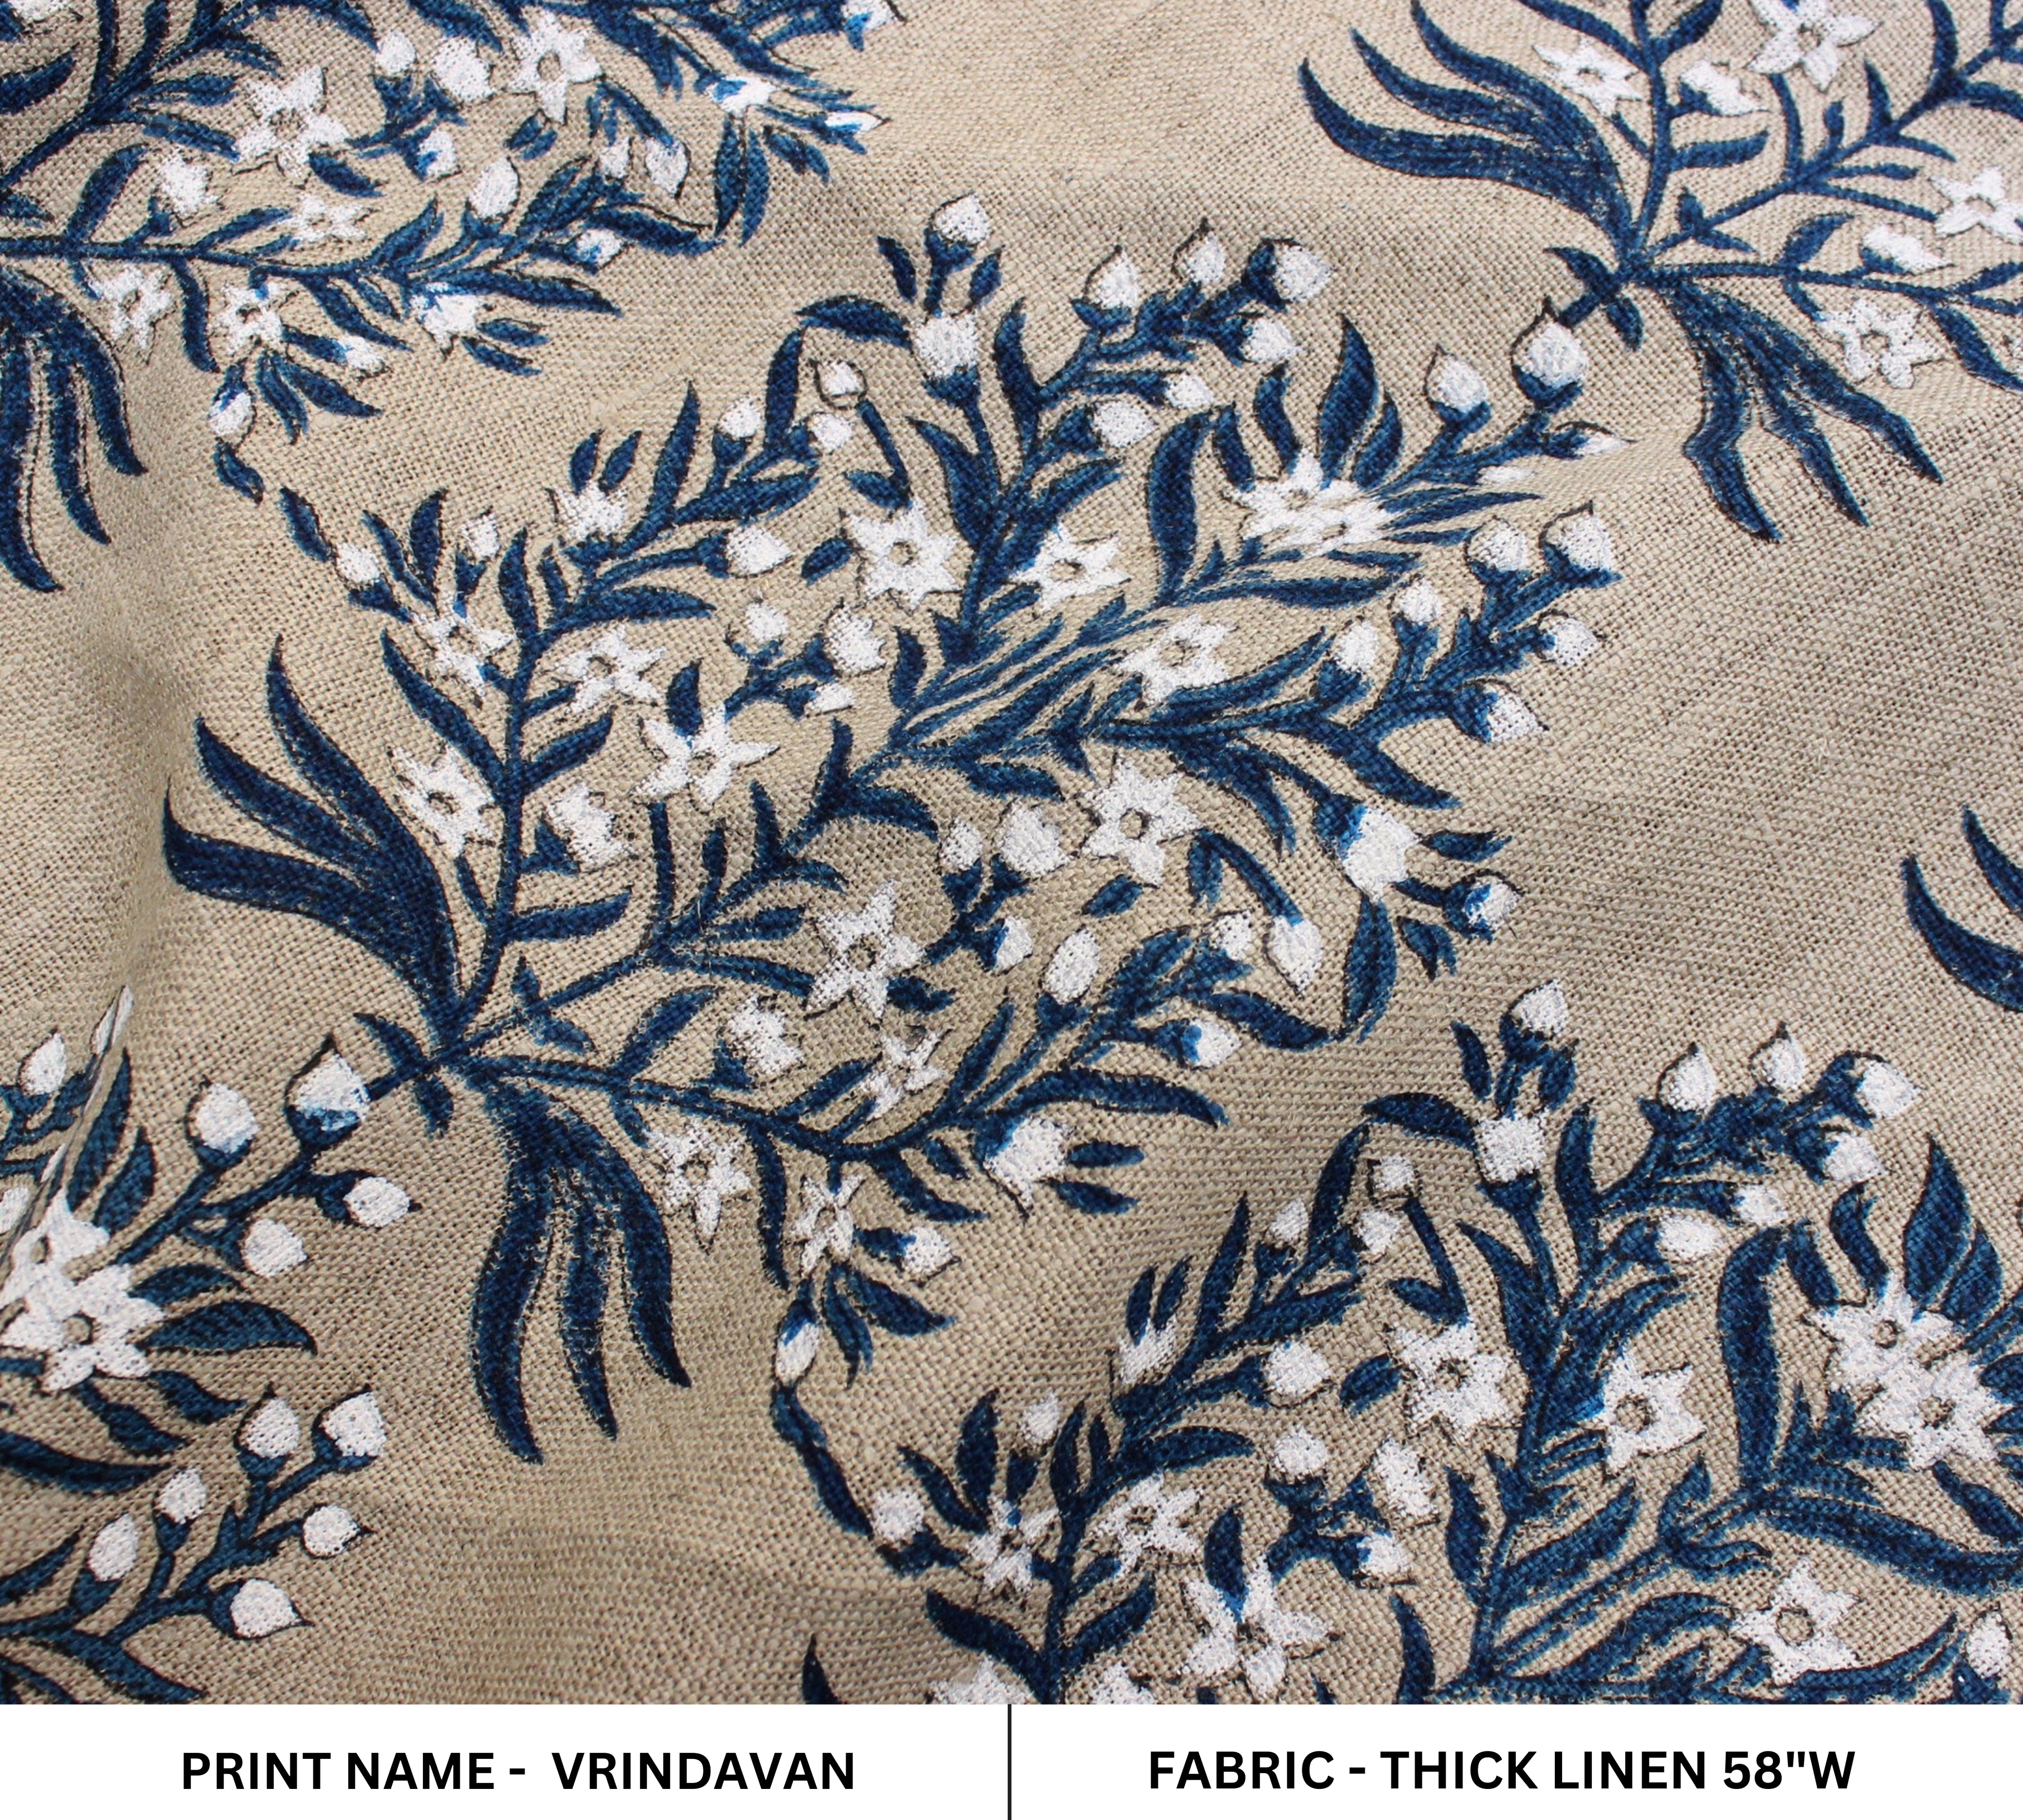 Block Print Linen Fabric, Vrindavan Flower  Hand Block Linen Pure Natural Fabrichandloom Upholstery  India Linen Fabric  Indian Hand Block Print  Indigo & White